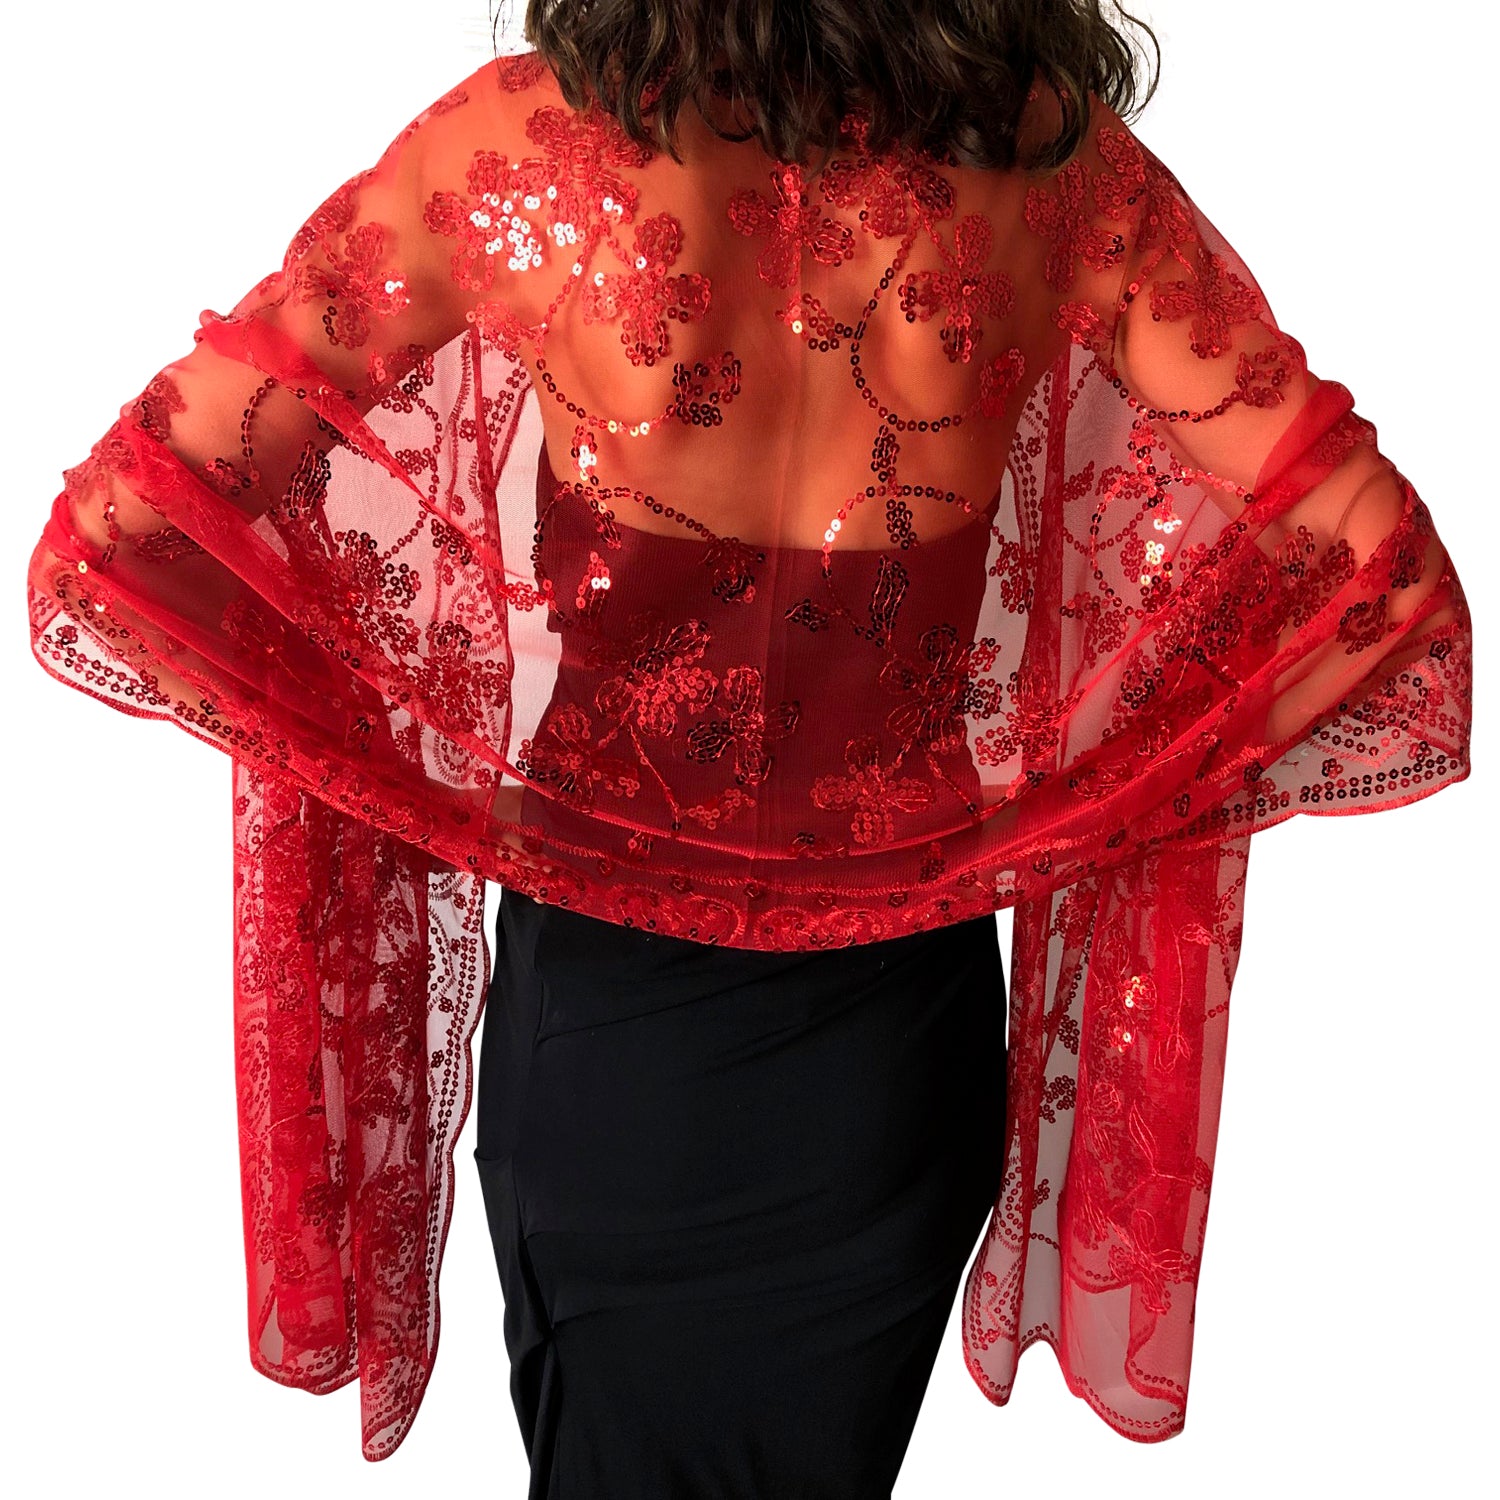 red evening shawl